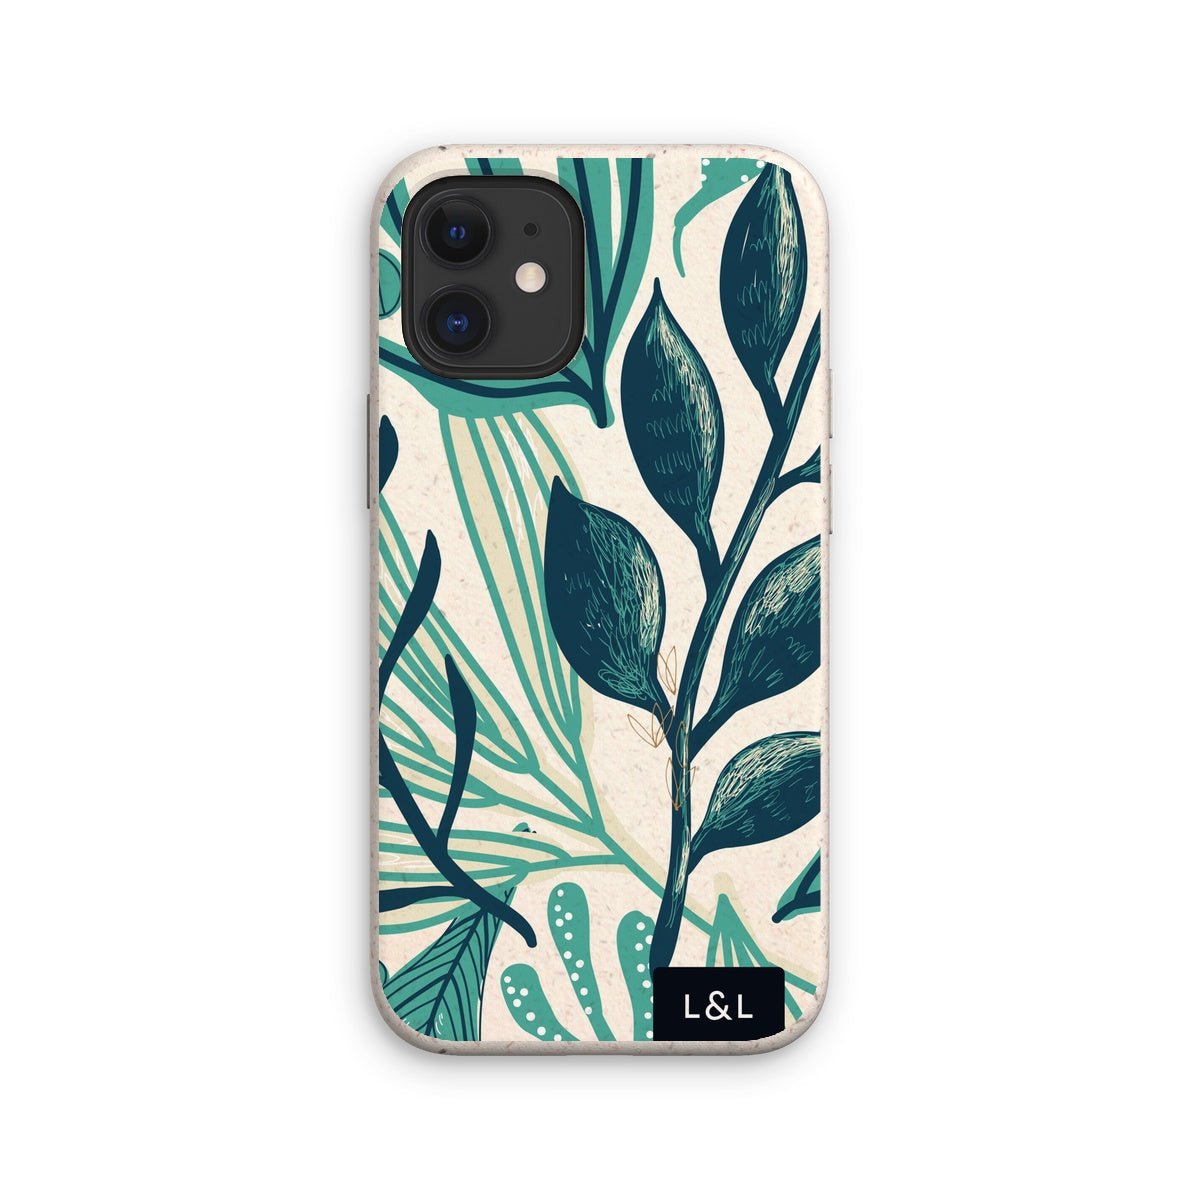 Calming botanics Eco Phone Case - Loam & Lore